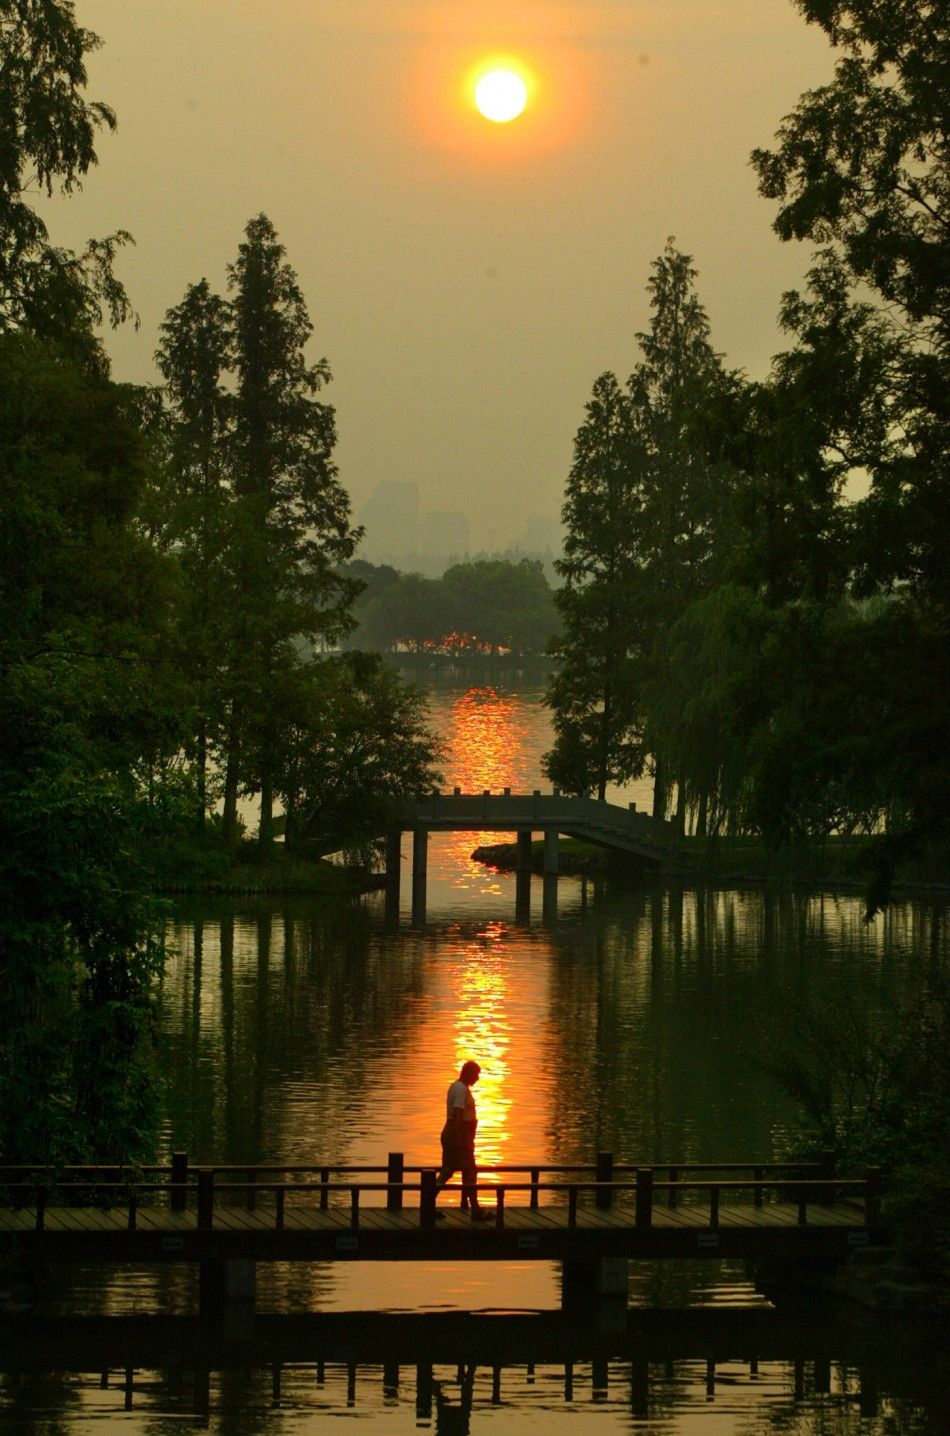 1. West Lake Cultural Landscape of Hangzhou, China